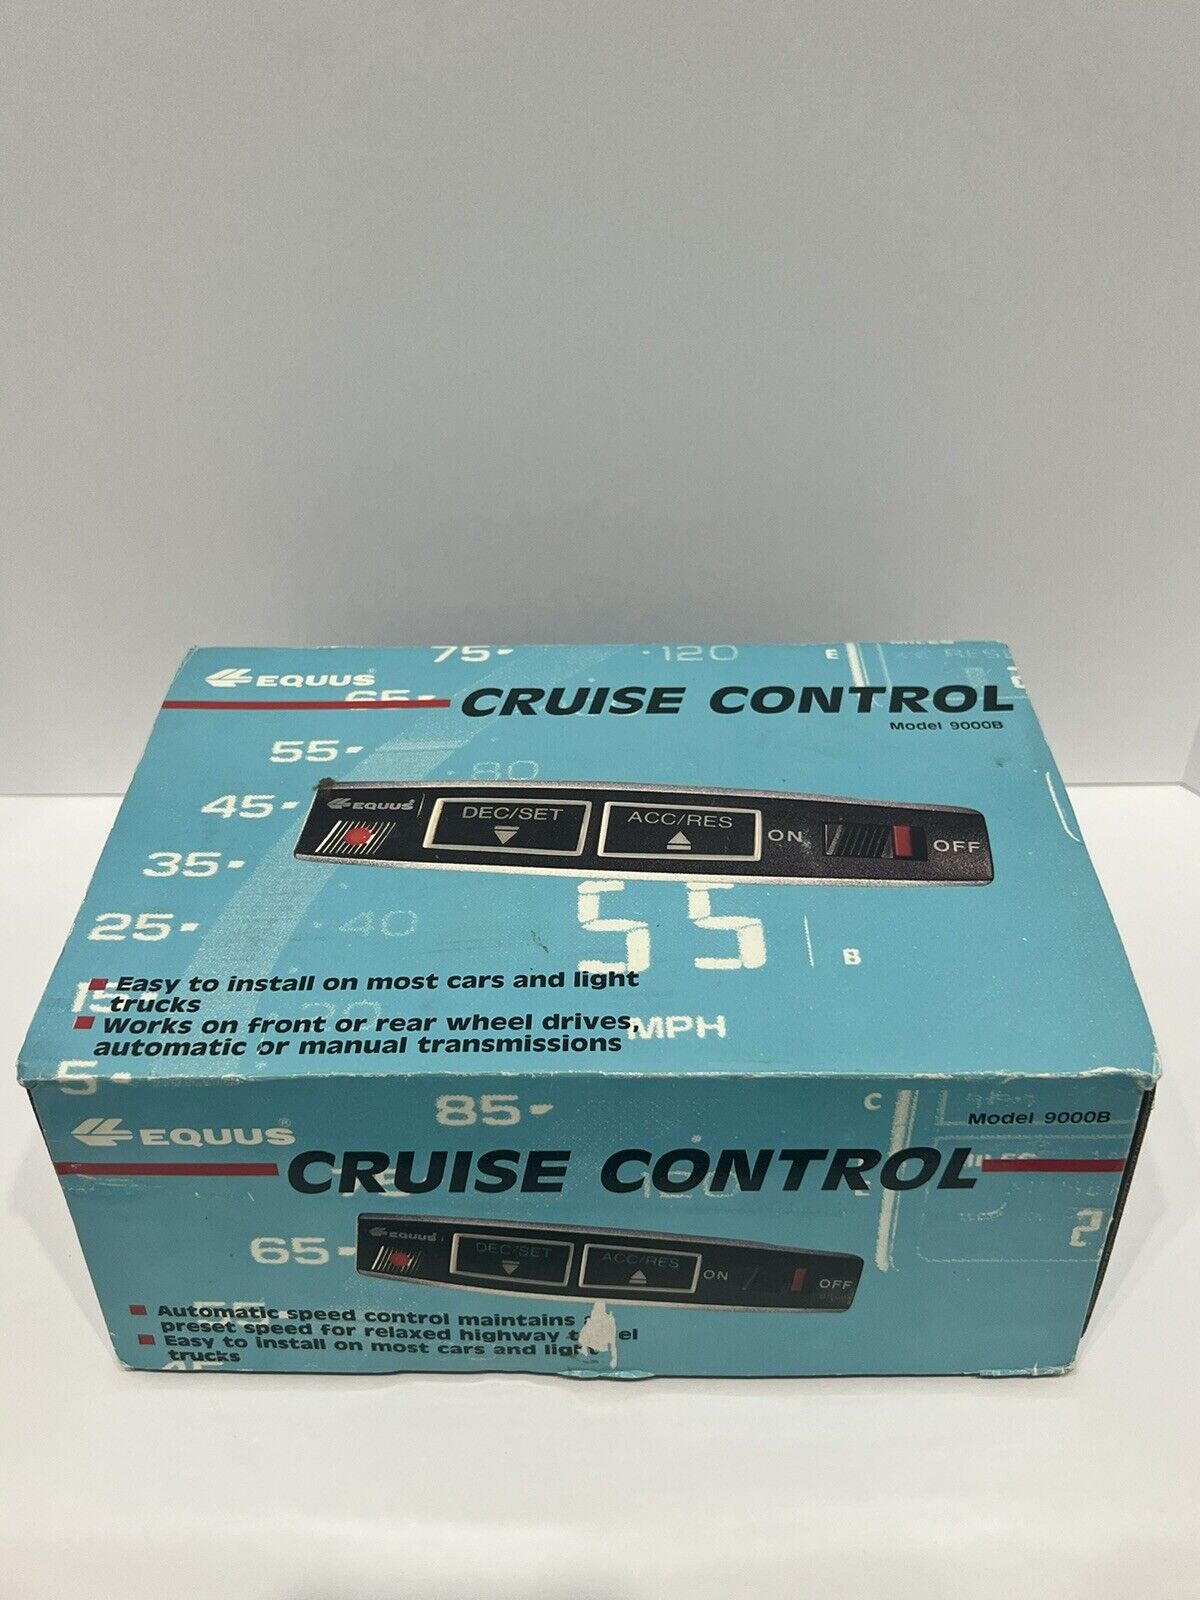 Equus Model 9000B Cruise Control - New In Box